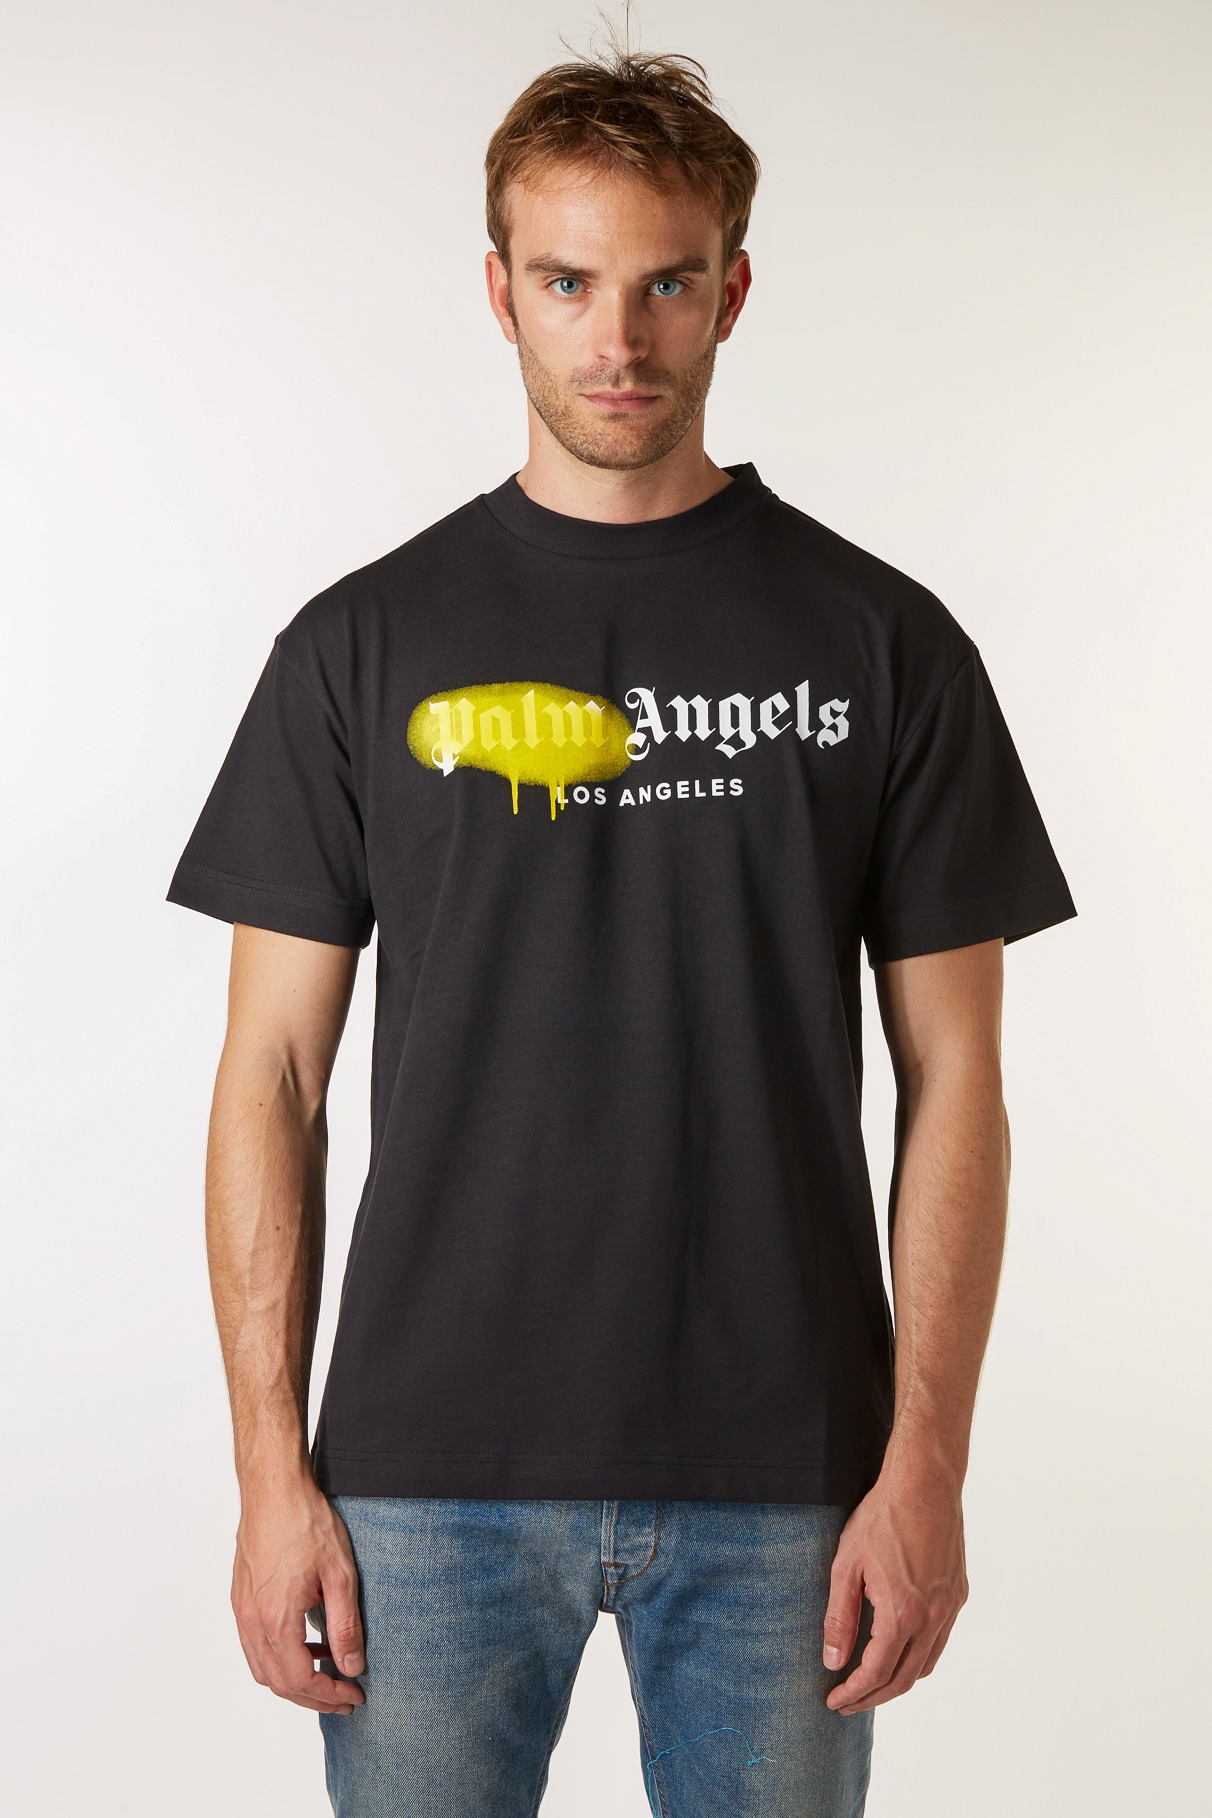 PALM ANGELS T-SHIRT PMAA001S204130551018 BLACK/YELLOW